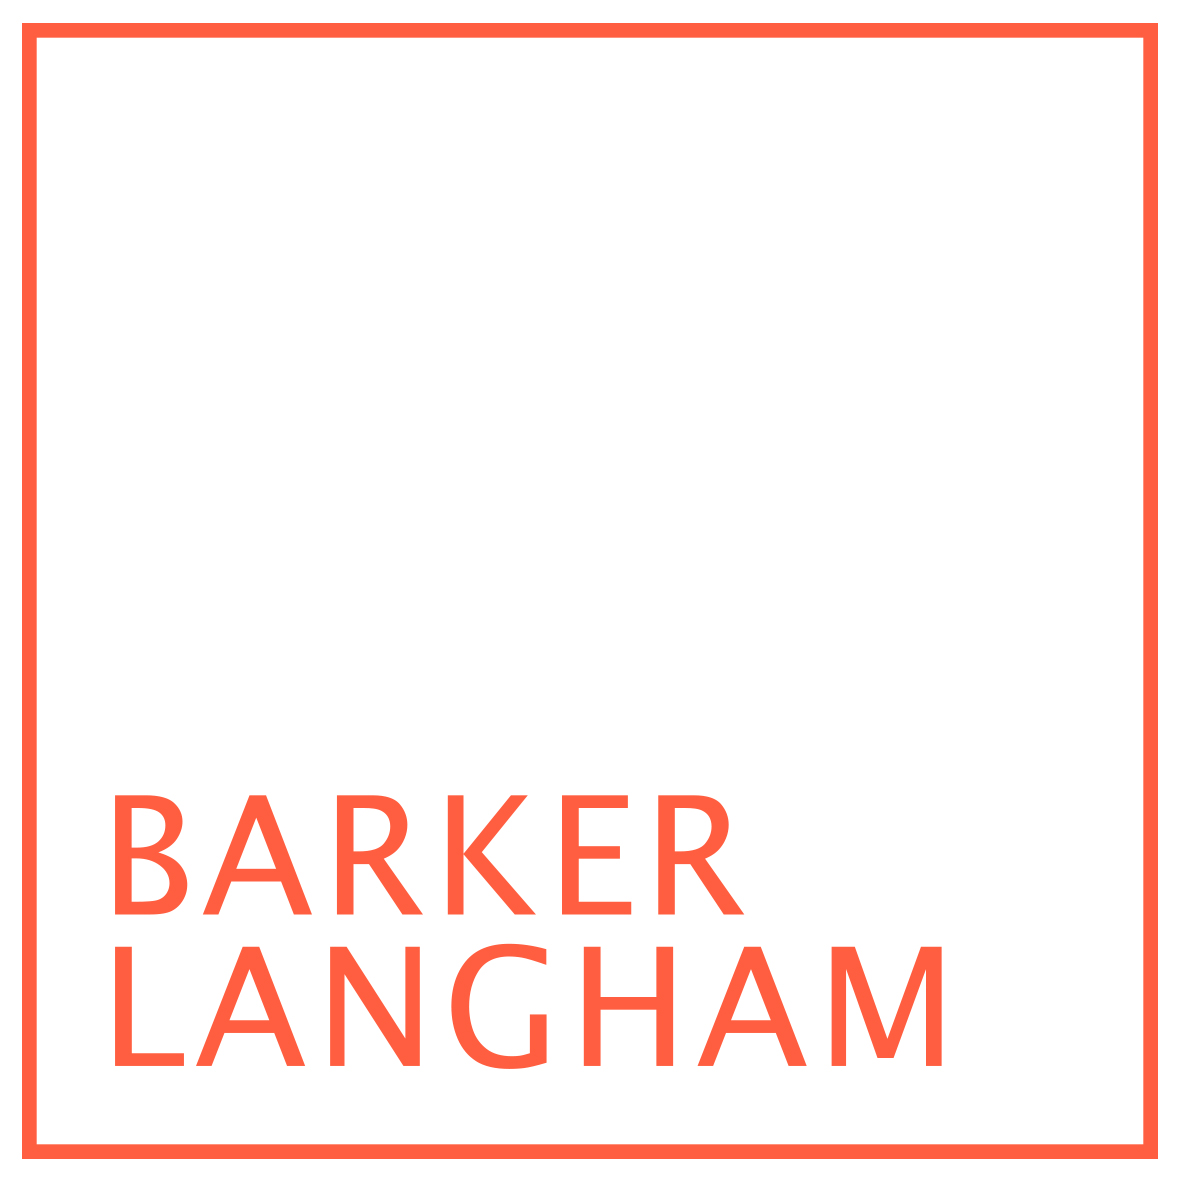 The Barker Langham Logo - the outline of an orange square with the name BARKER LANGHAM sitting in the bottom left hand corner.